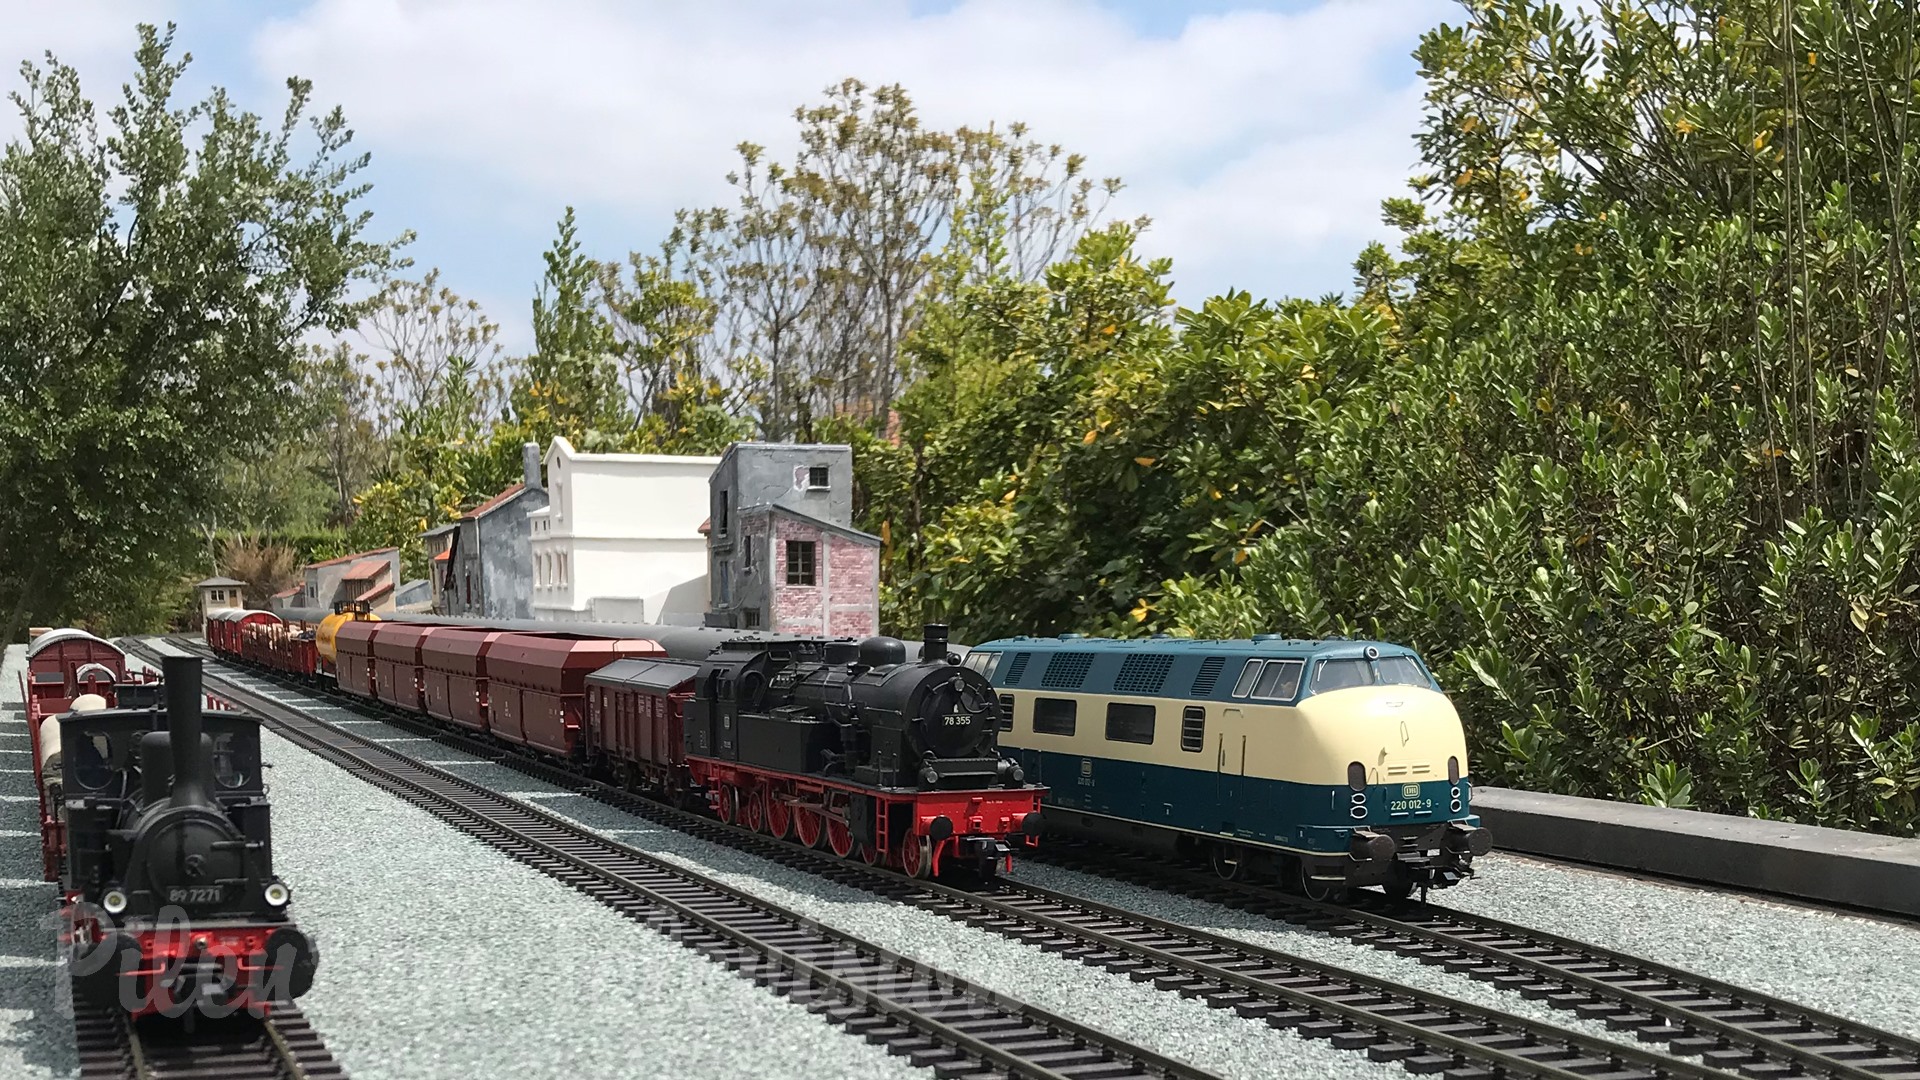 Ferromodelismo en Chile: Garden Railway or Garden Railroad and Märklin Model Trains of Jaime Ruz